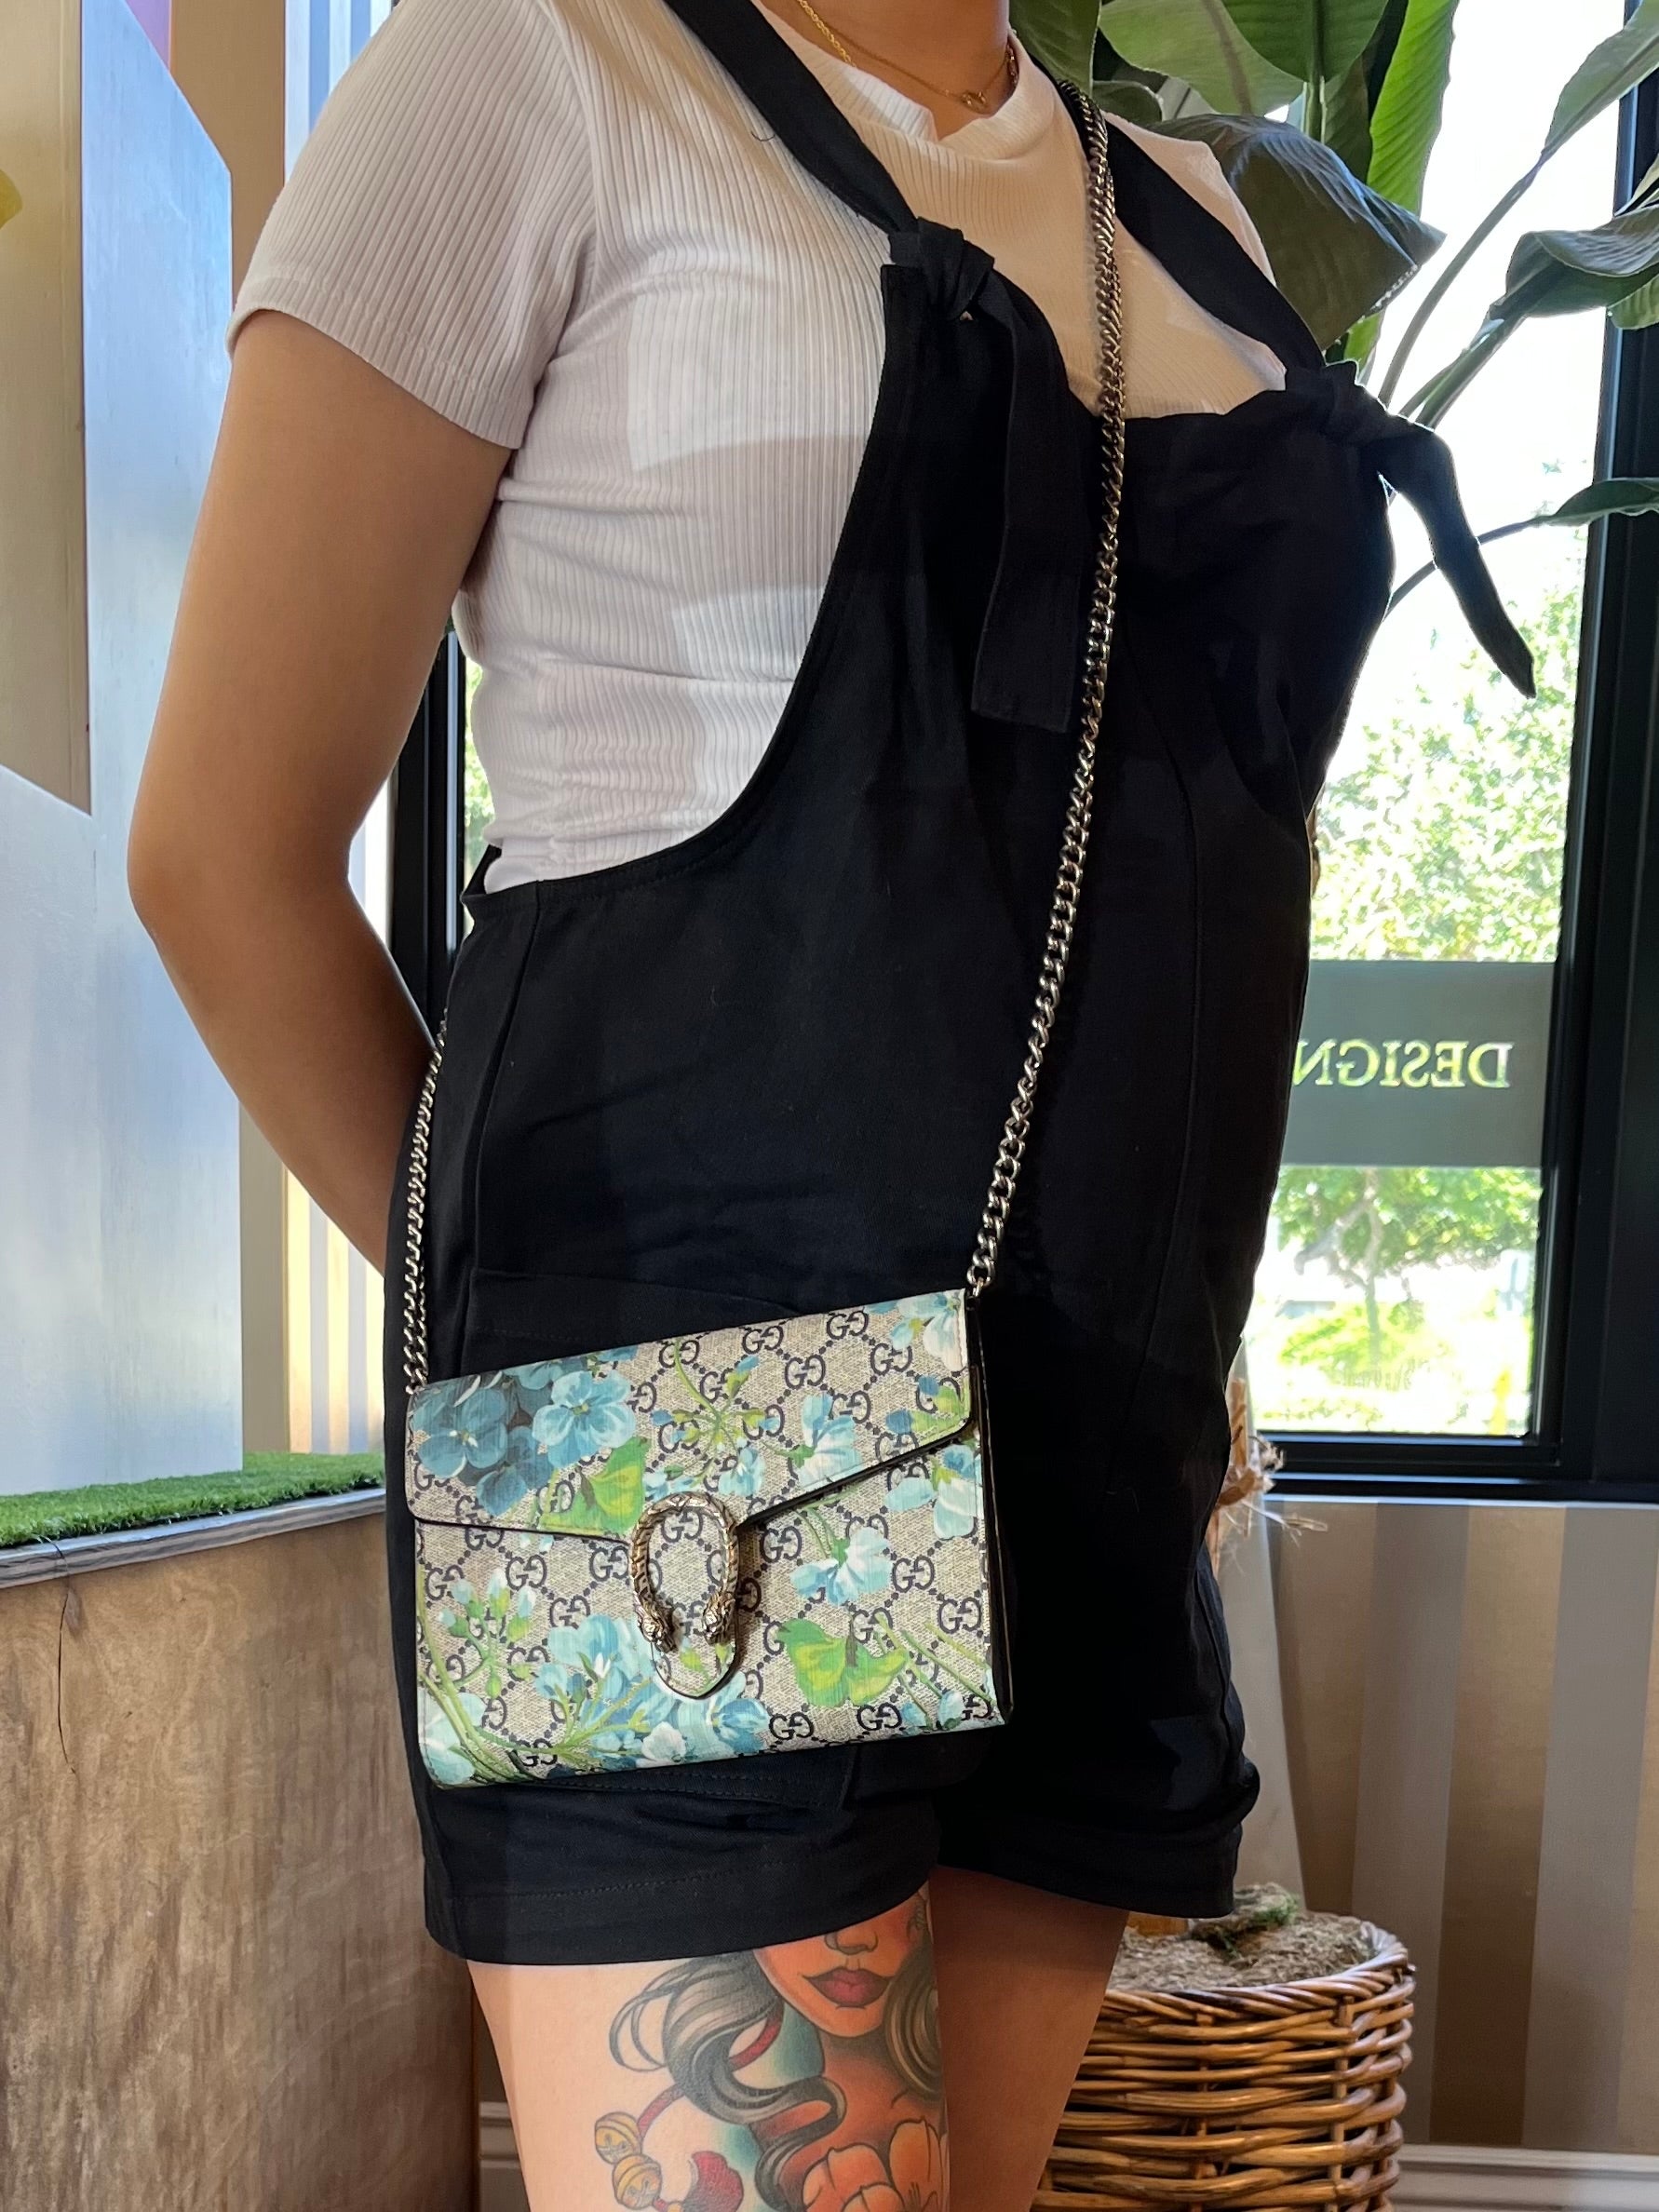 Gucci Pink GG Supreme Blooms Coated Canvas Medium Top Handle Boston Bag